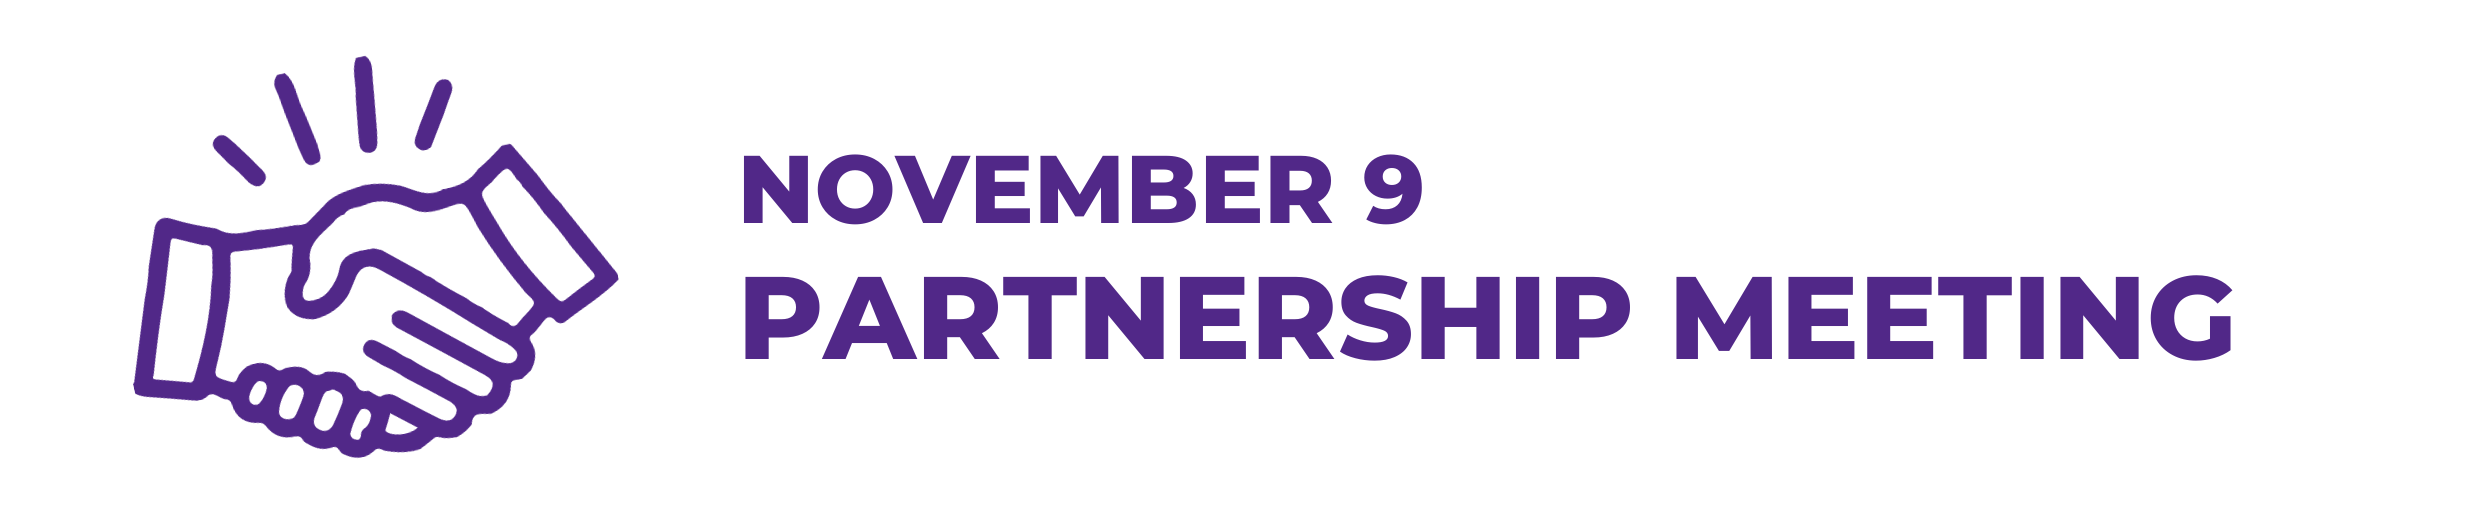 November 9 Partnership Meeting